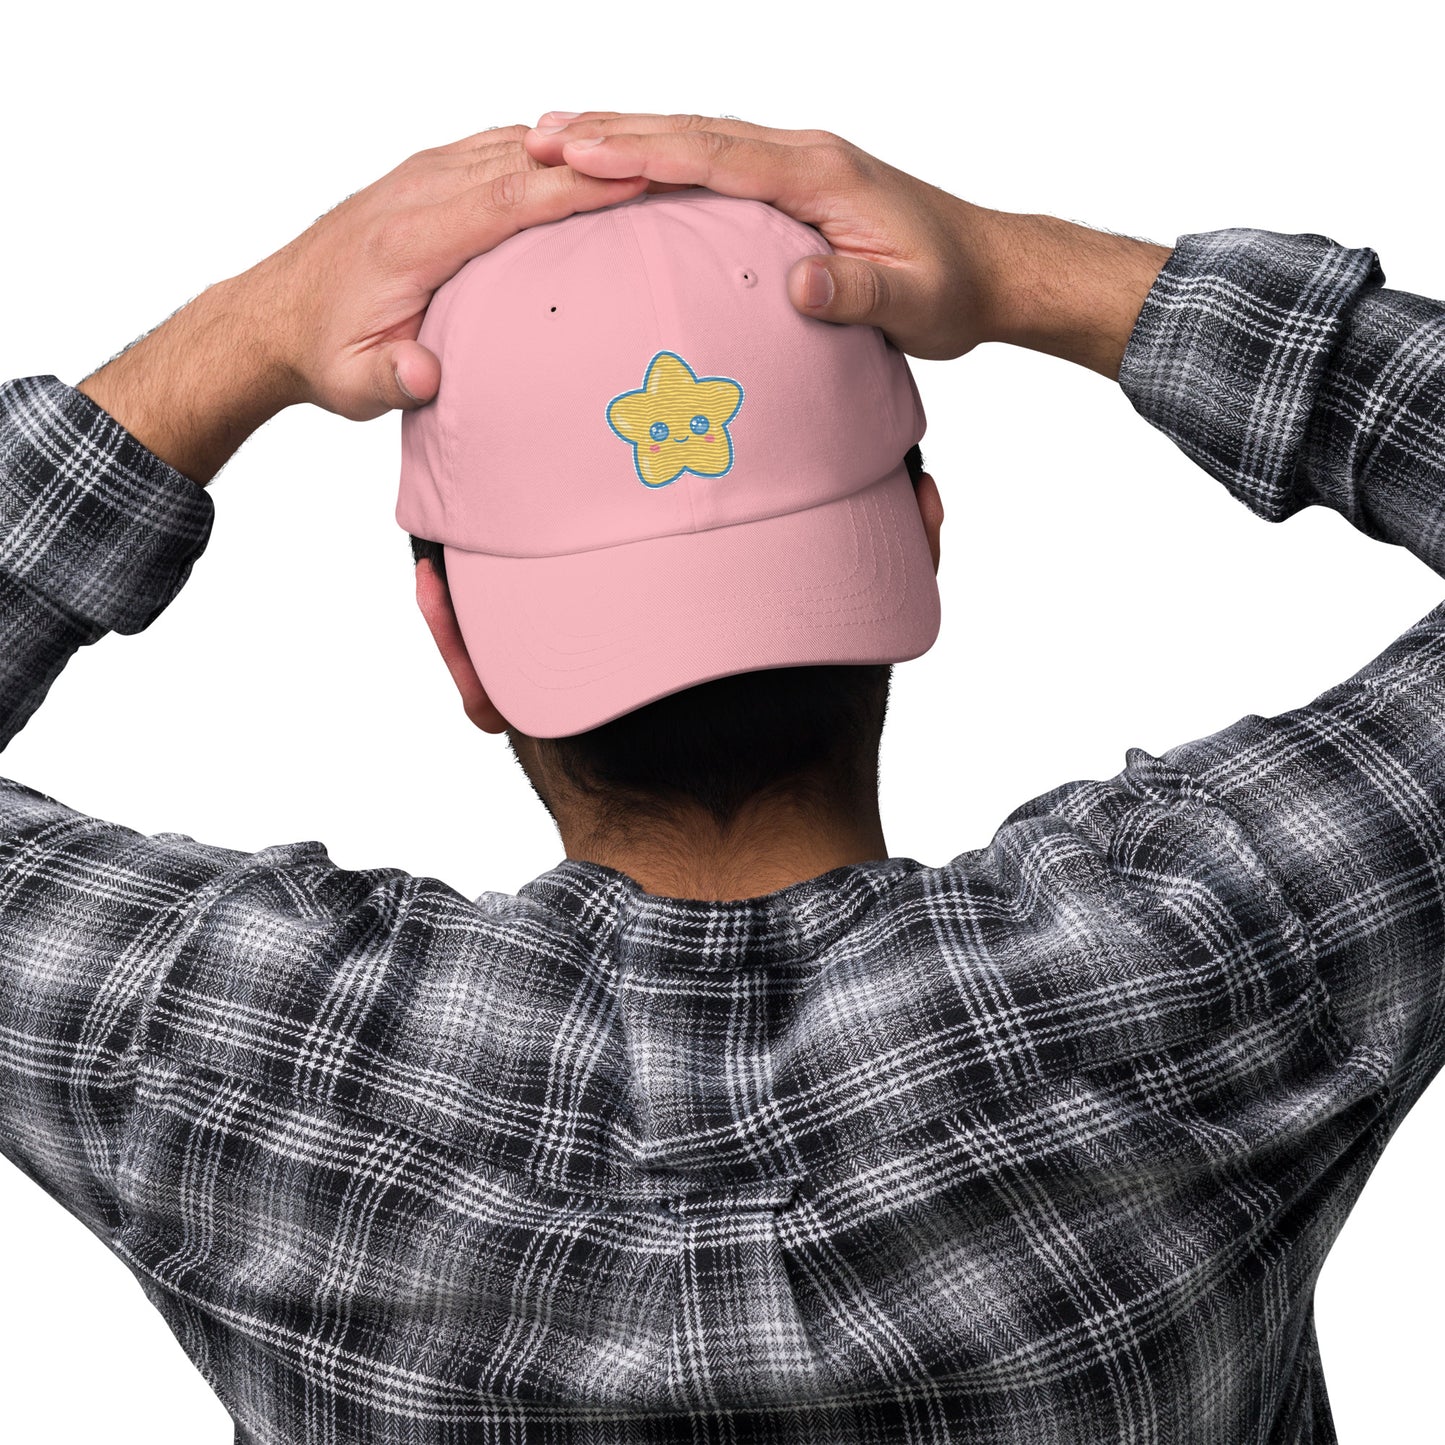 Kawaii Star Embroidered Pink Hat